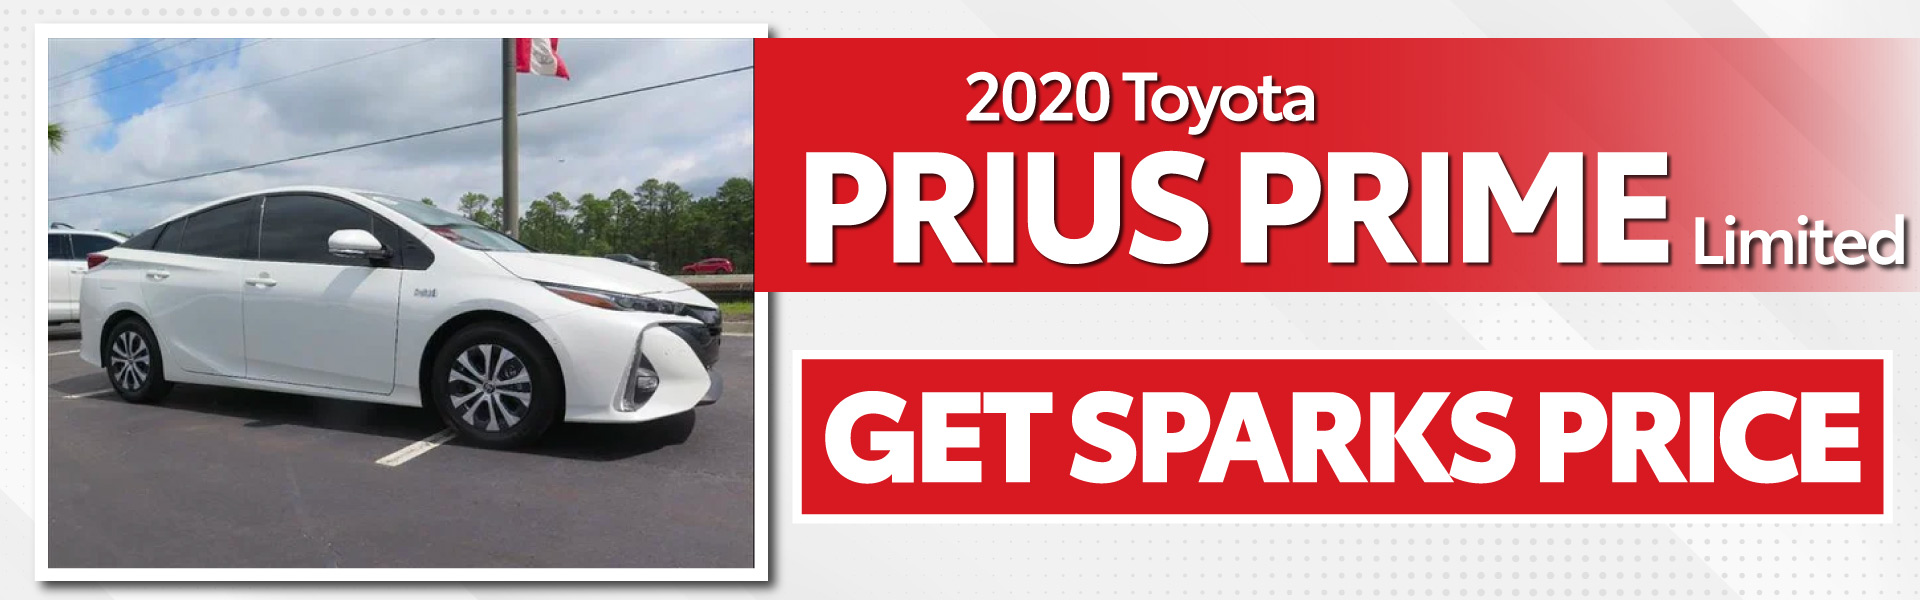 2020 Toyota Prius Prime Limited - Get Sparks Price